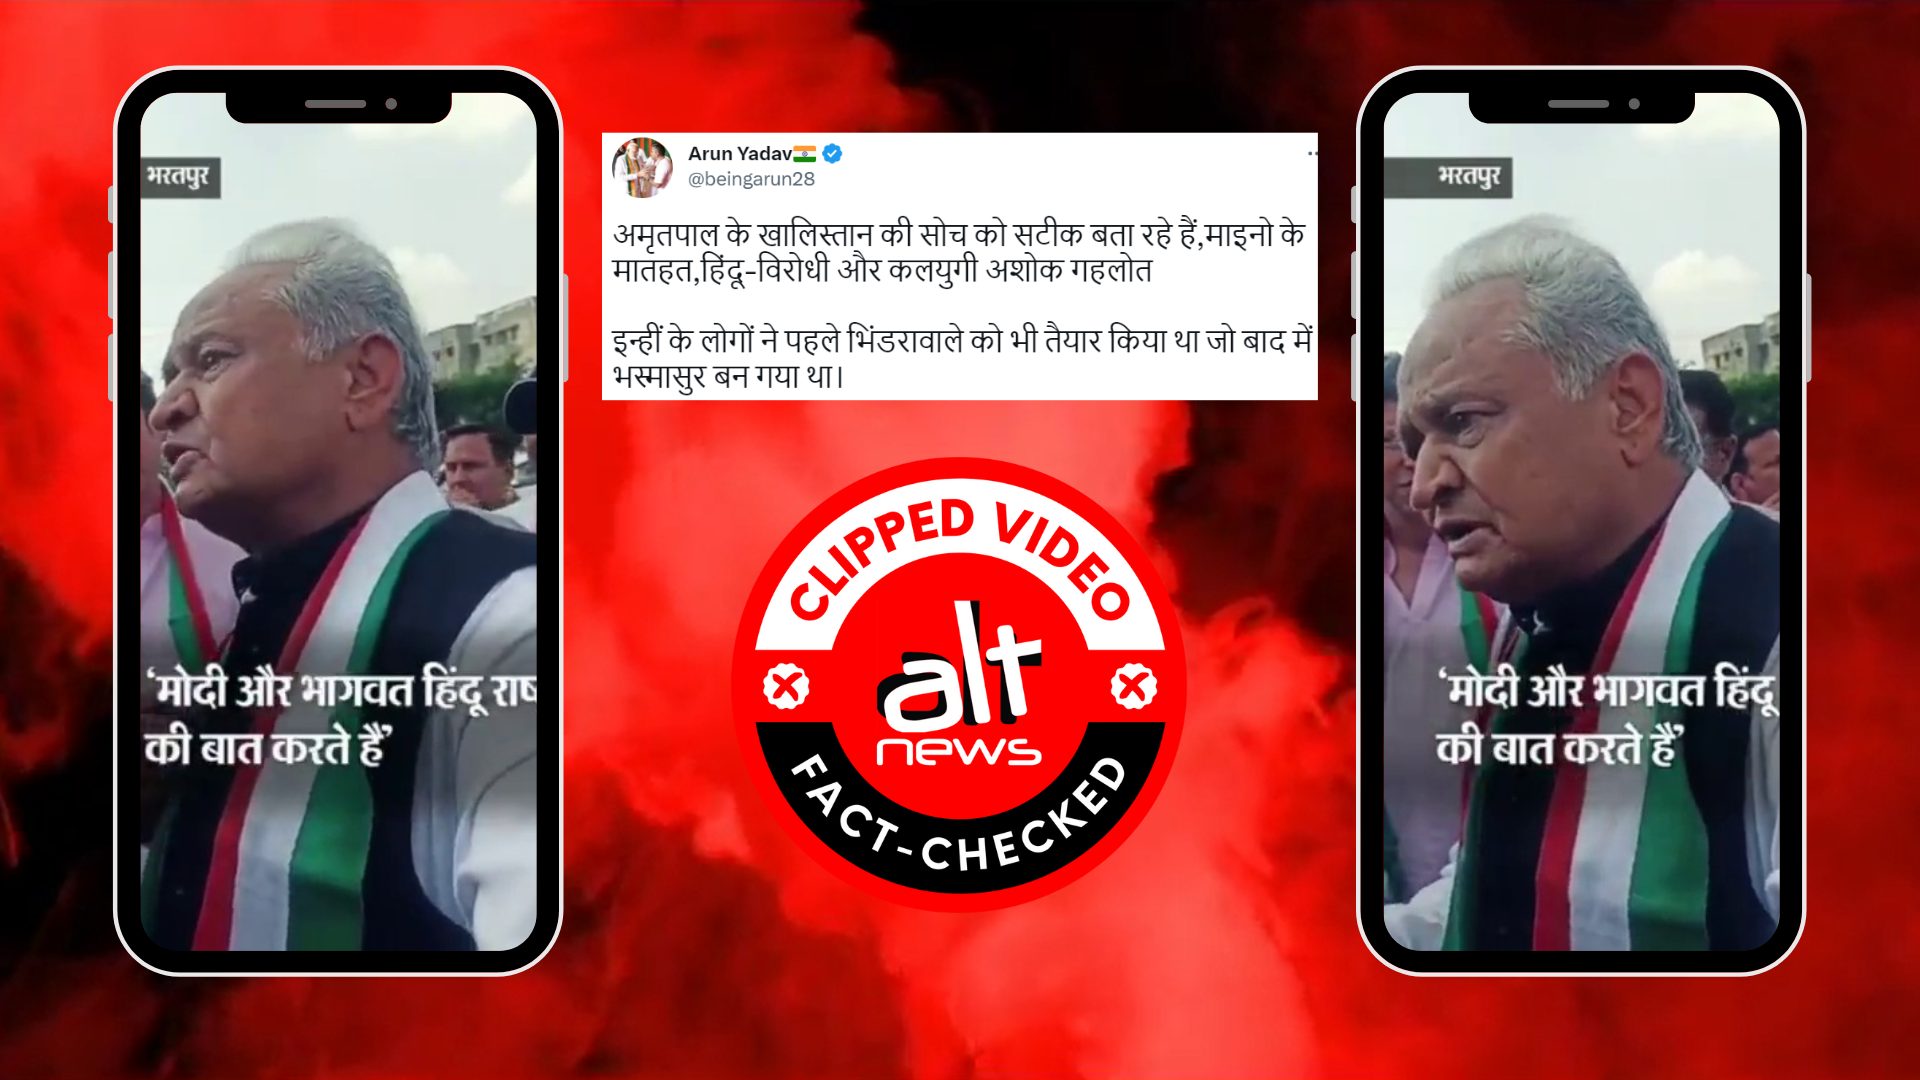 Clipped video of Ashok Gehlot viral with false claim of him backing Amritpal Singh on Khalistan - Alt News